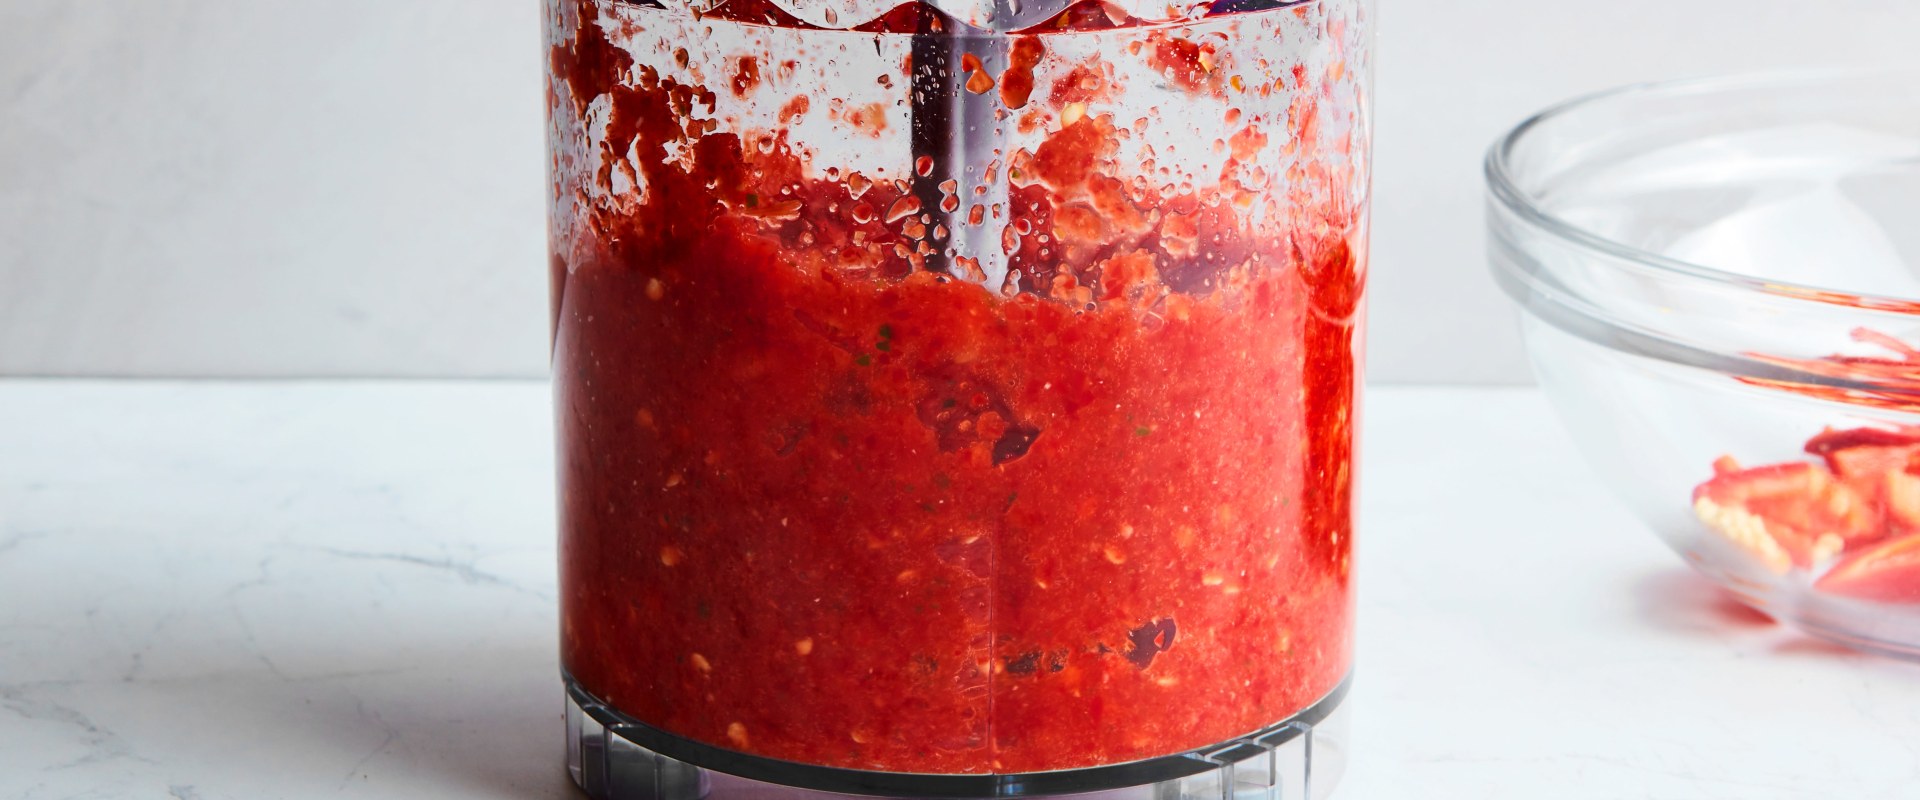 A Deeper Look at Cholula Chili Sauce